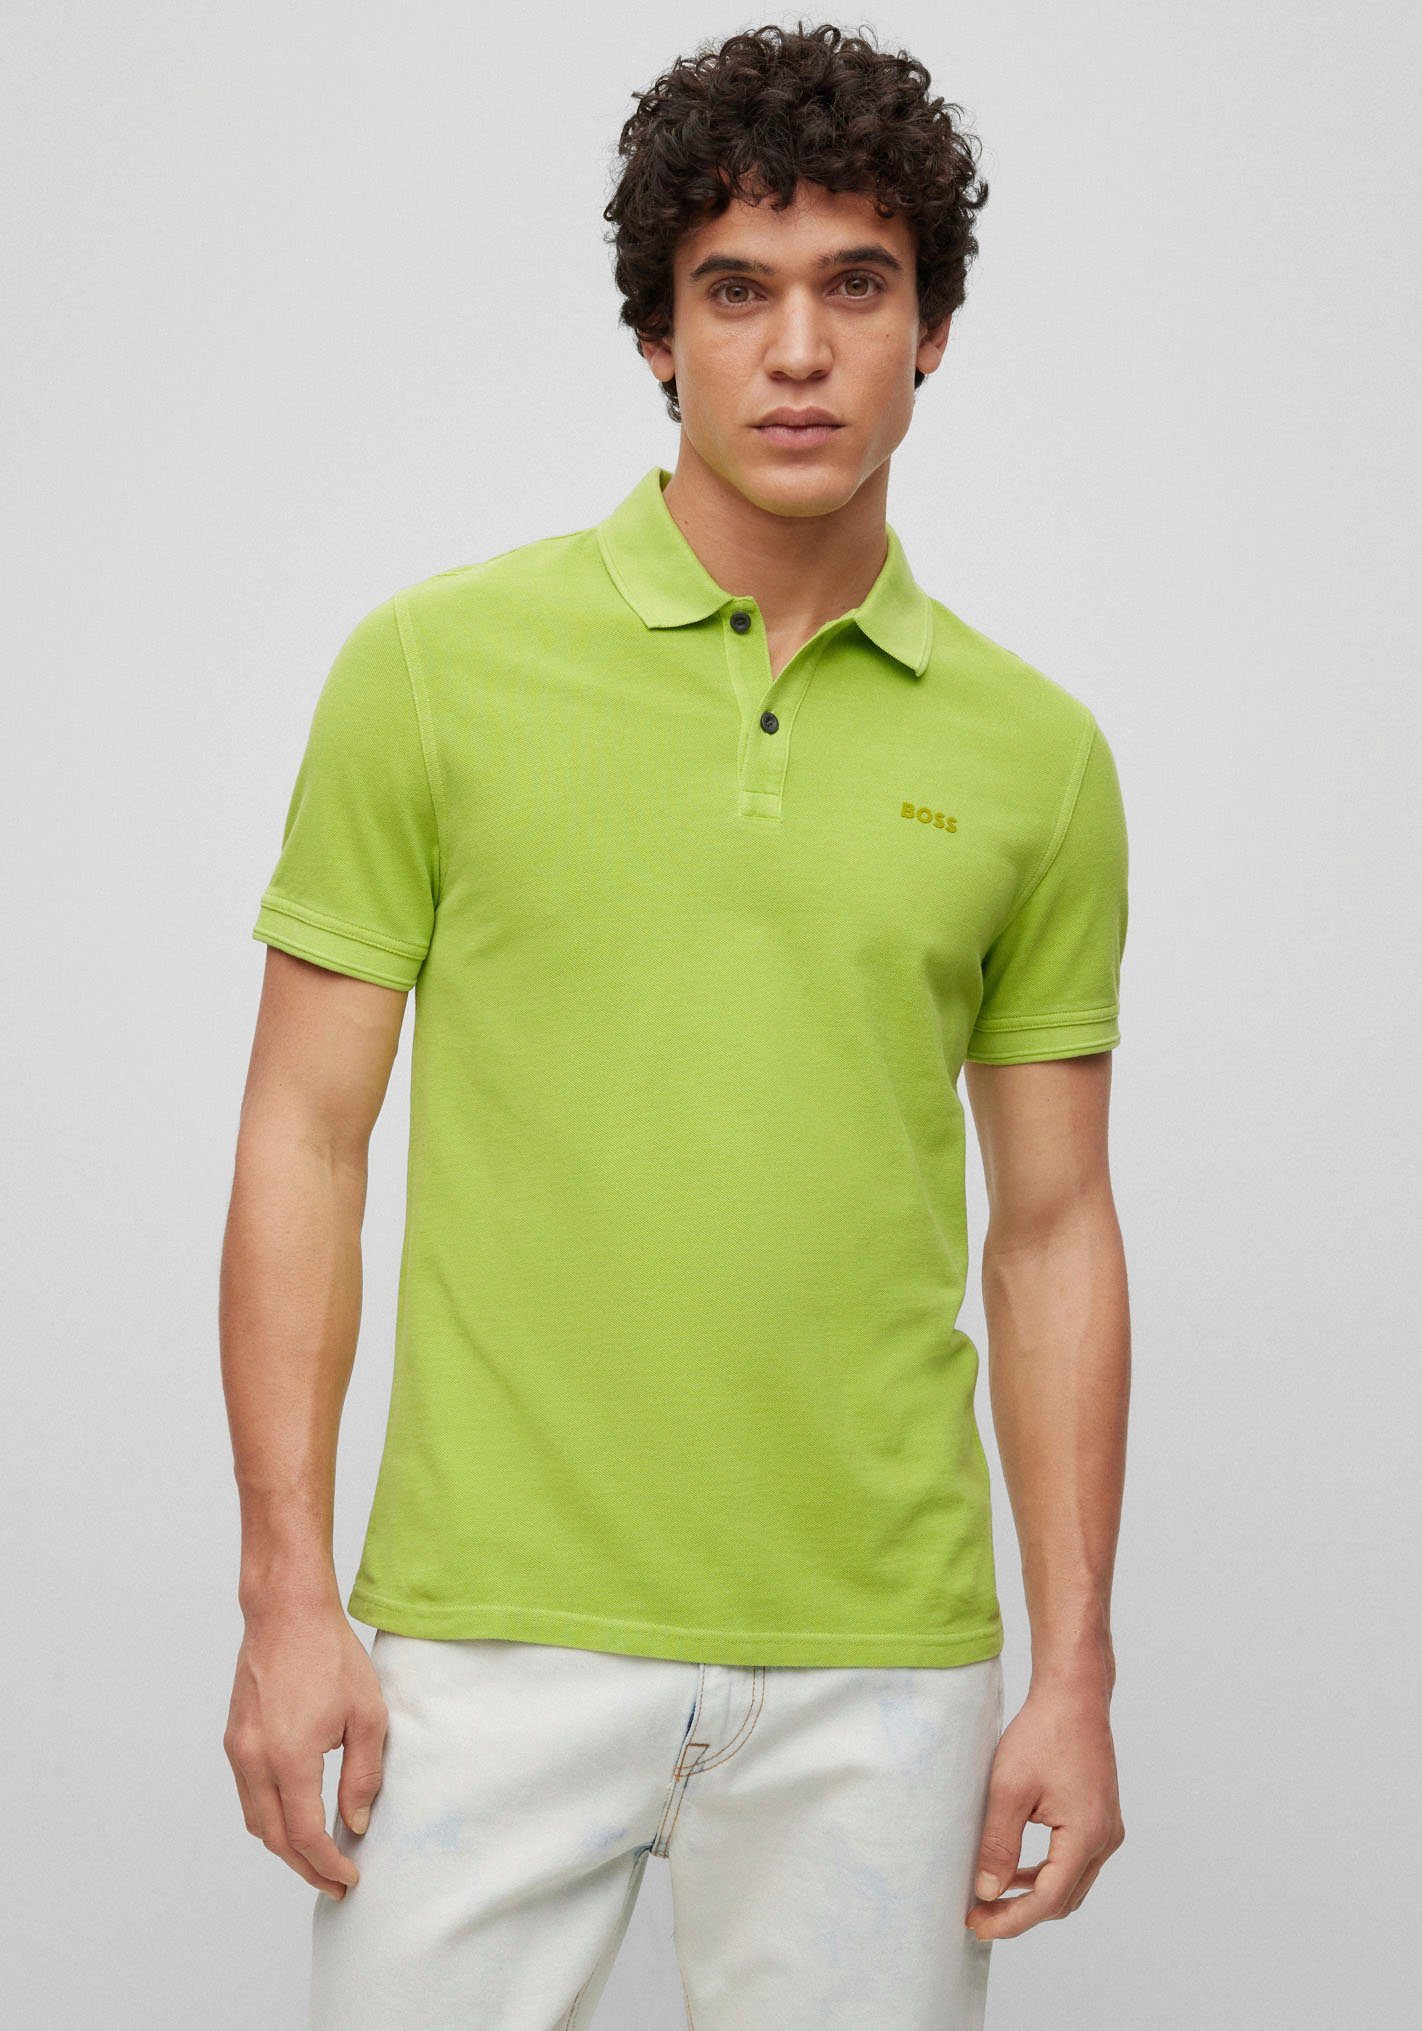 Green BOSS am Prime Logoschriftzug Bright ORANGE mit Brustkorb Poloshirt